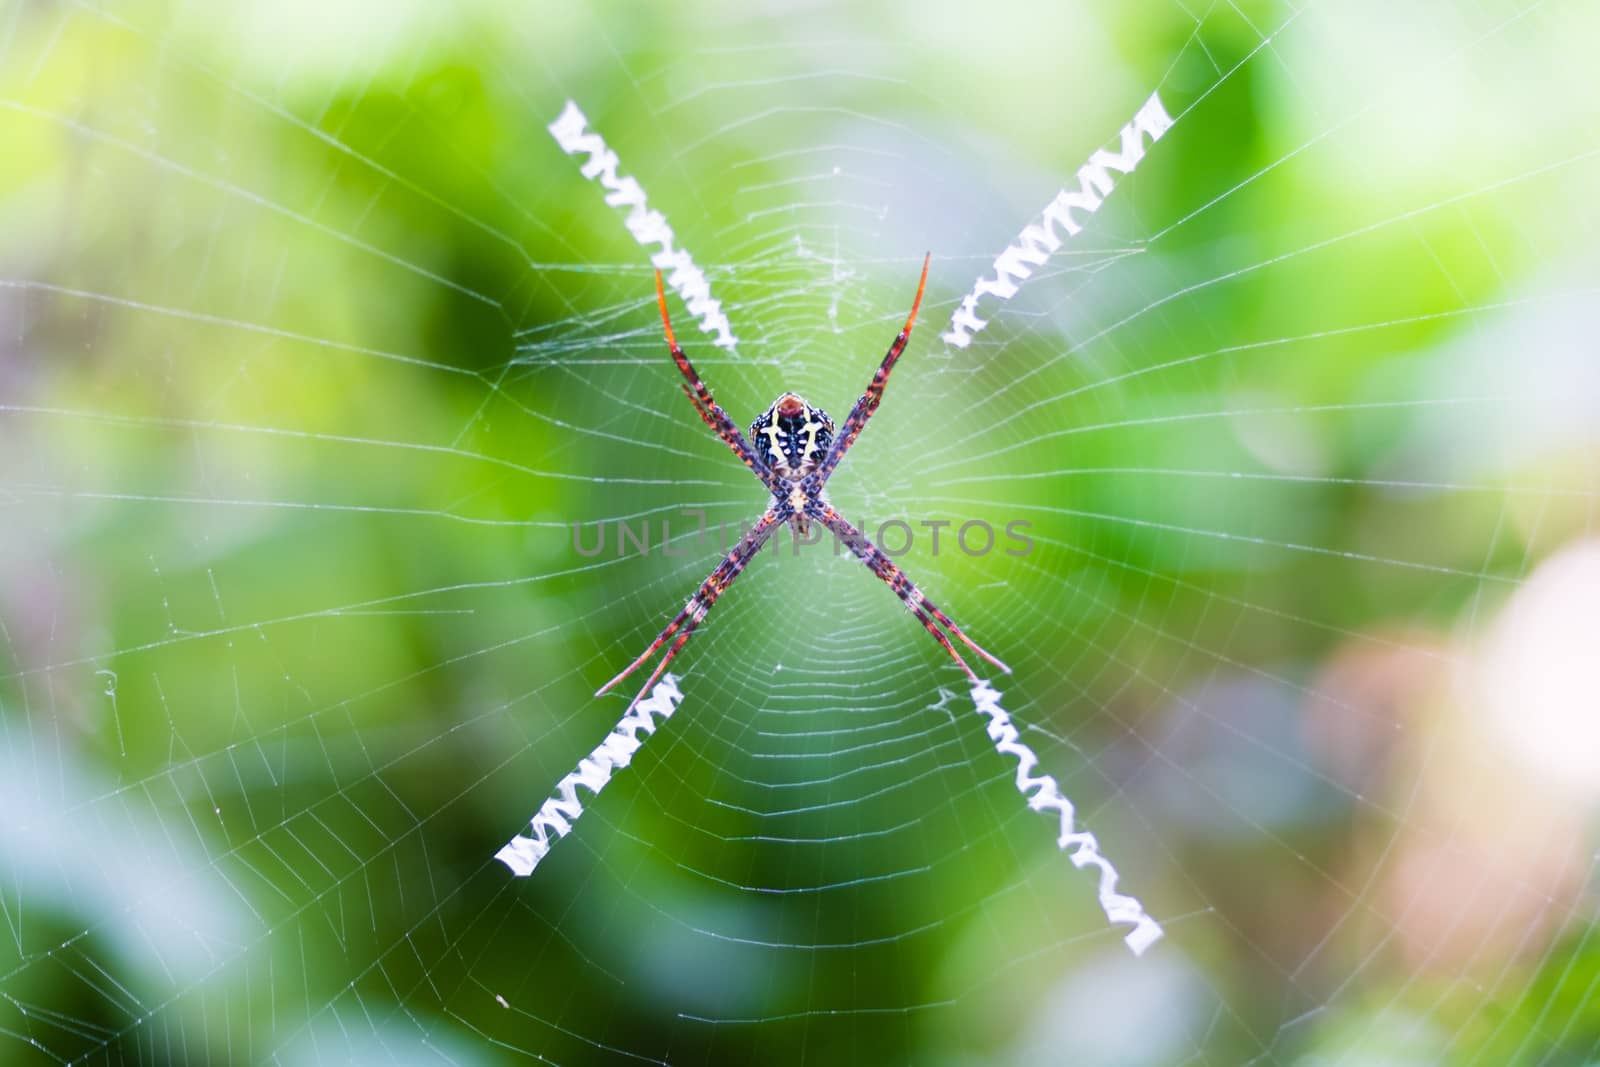 spider holding on cobweb by moggara12